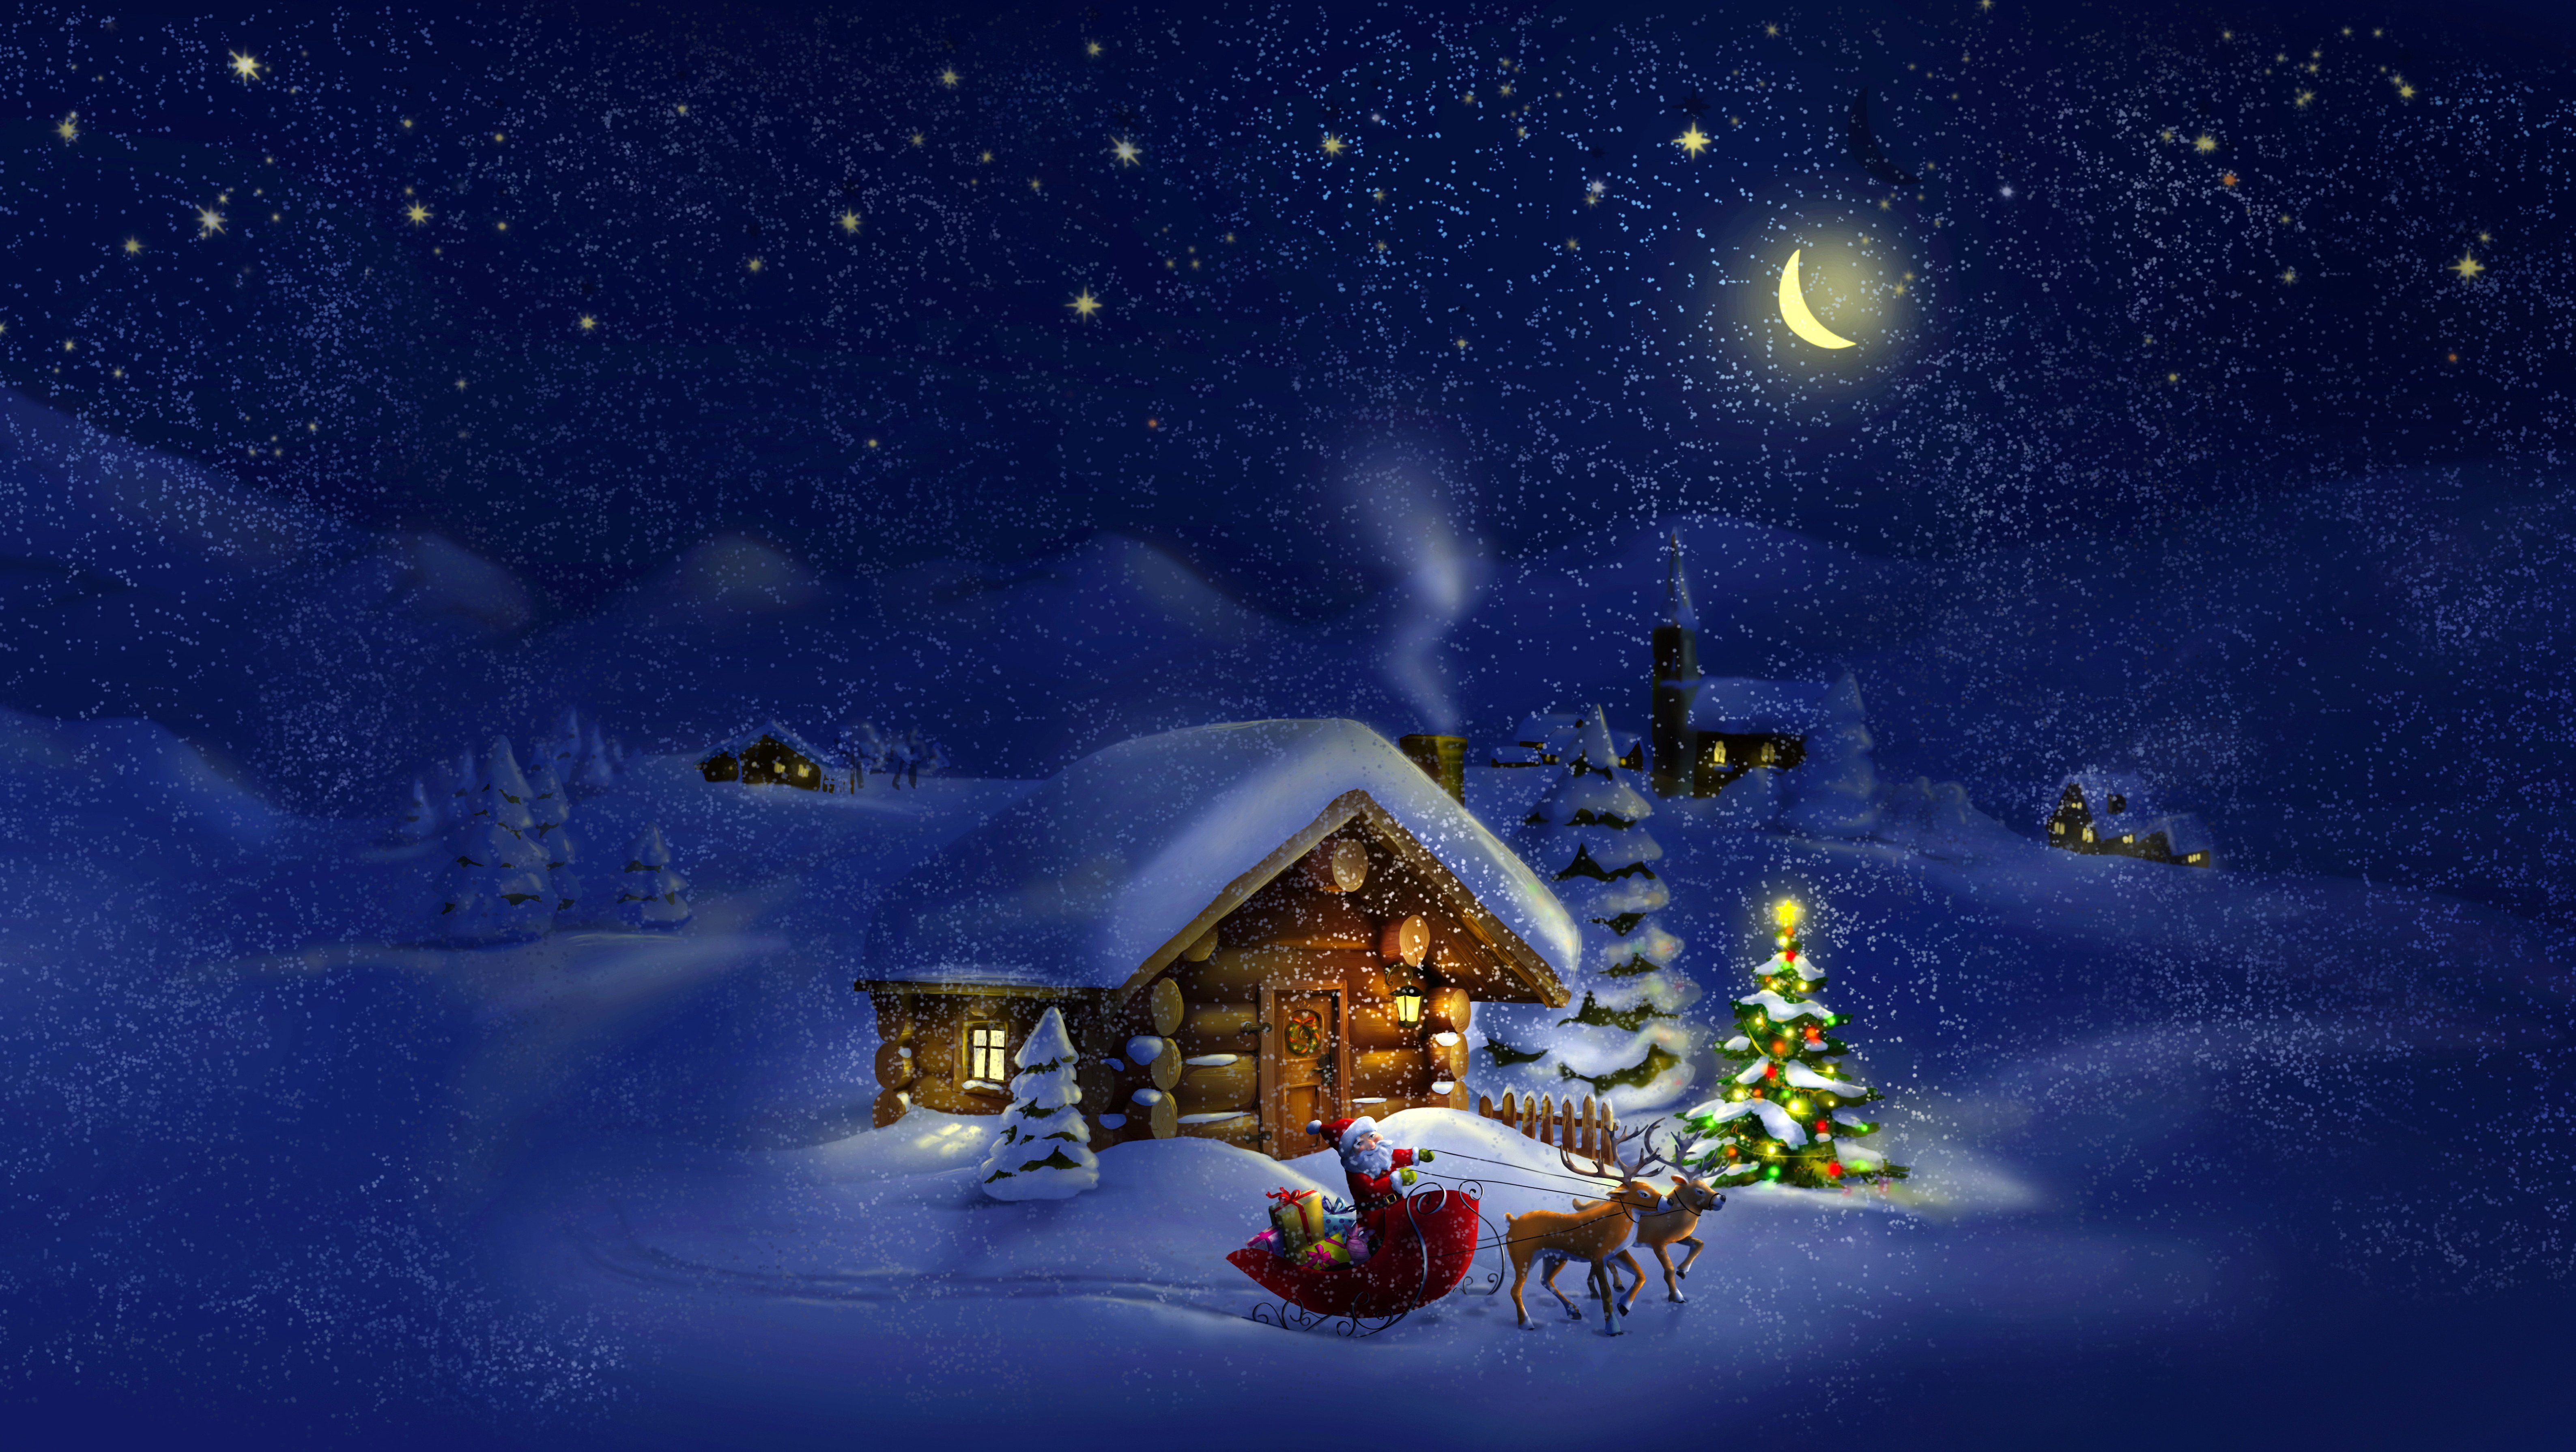 Easons Winter Houses Holidays Christmas ( New year ) Deer Snow Moon Christmas tree Night Santa Claus Nature wallpaperx3580